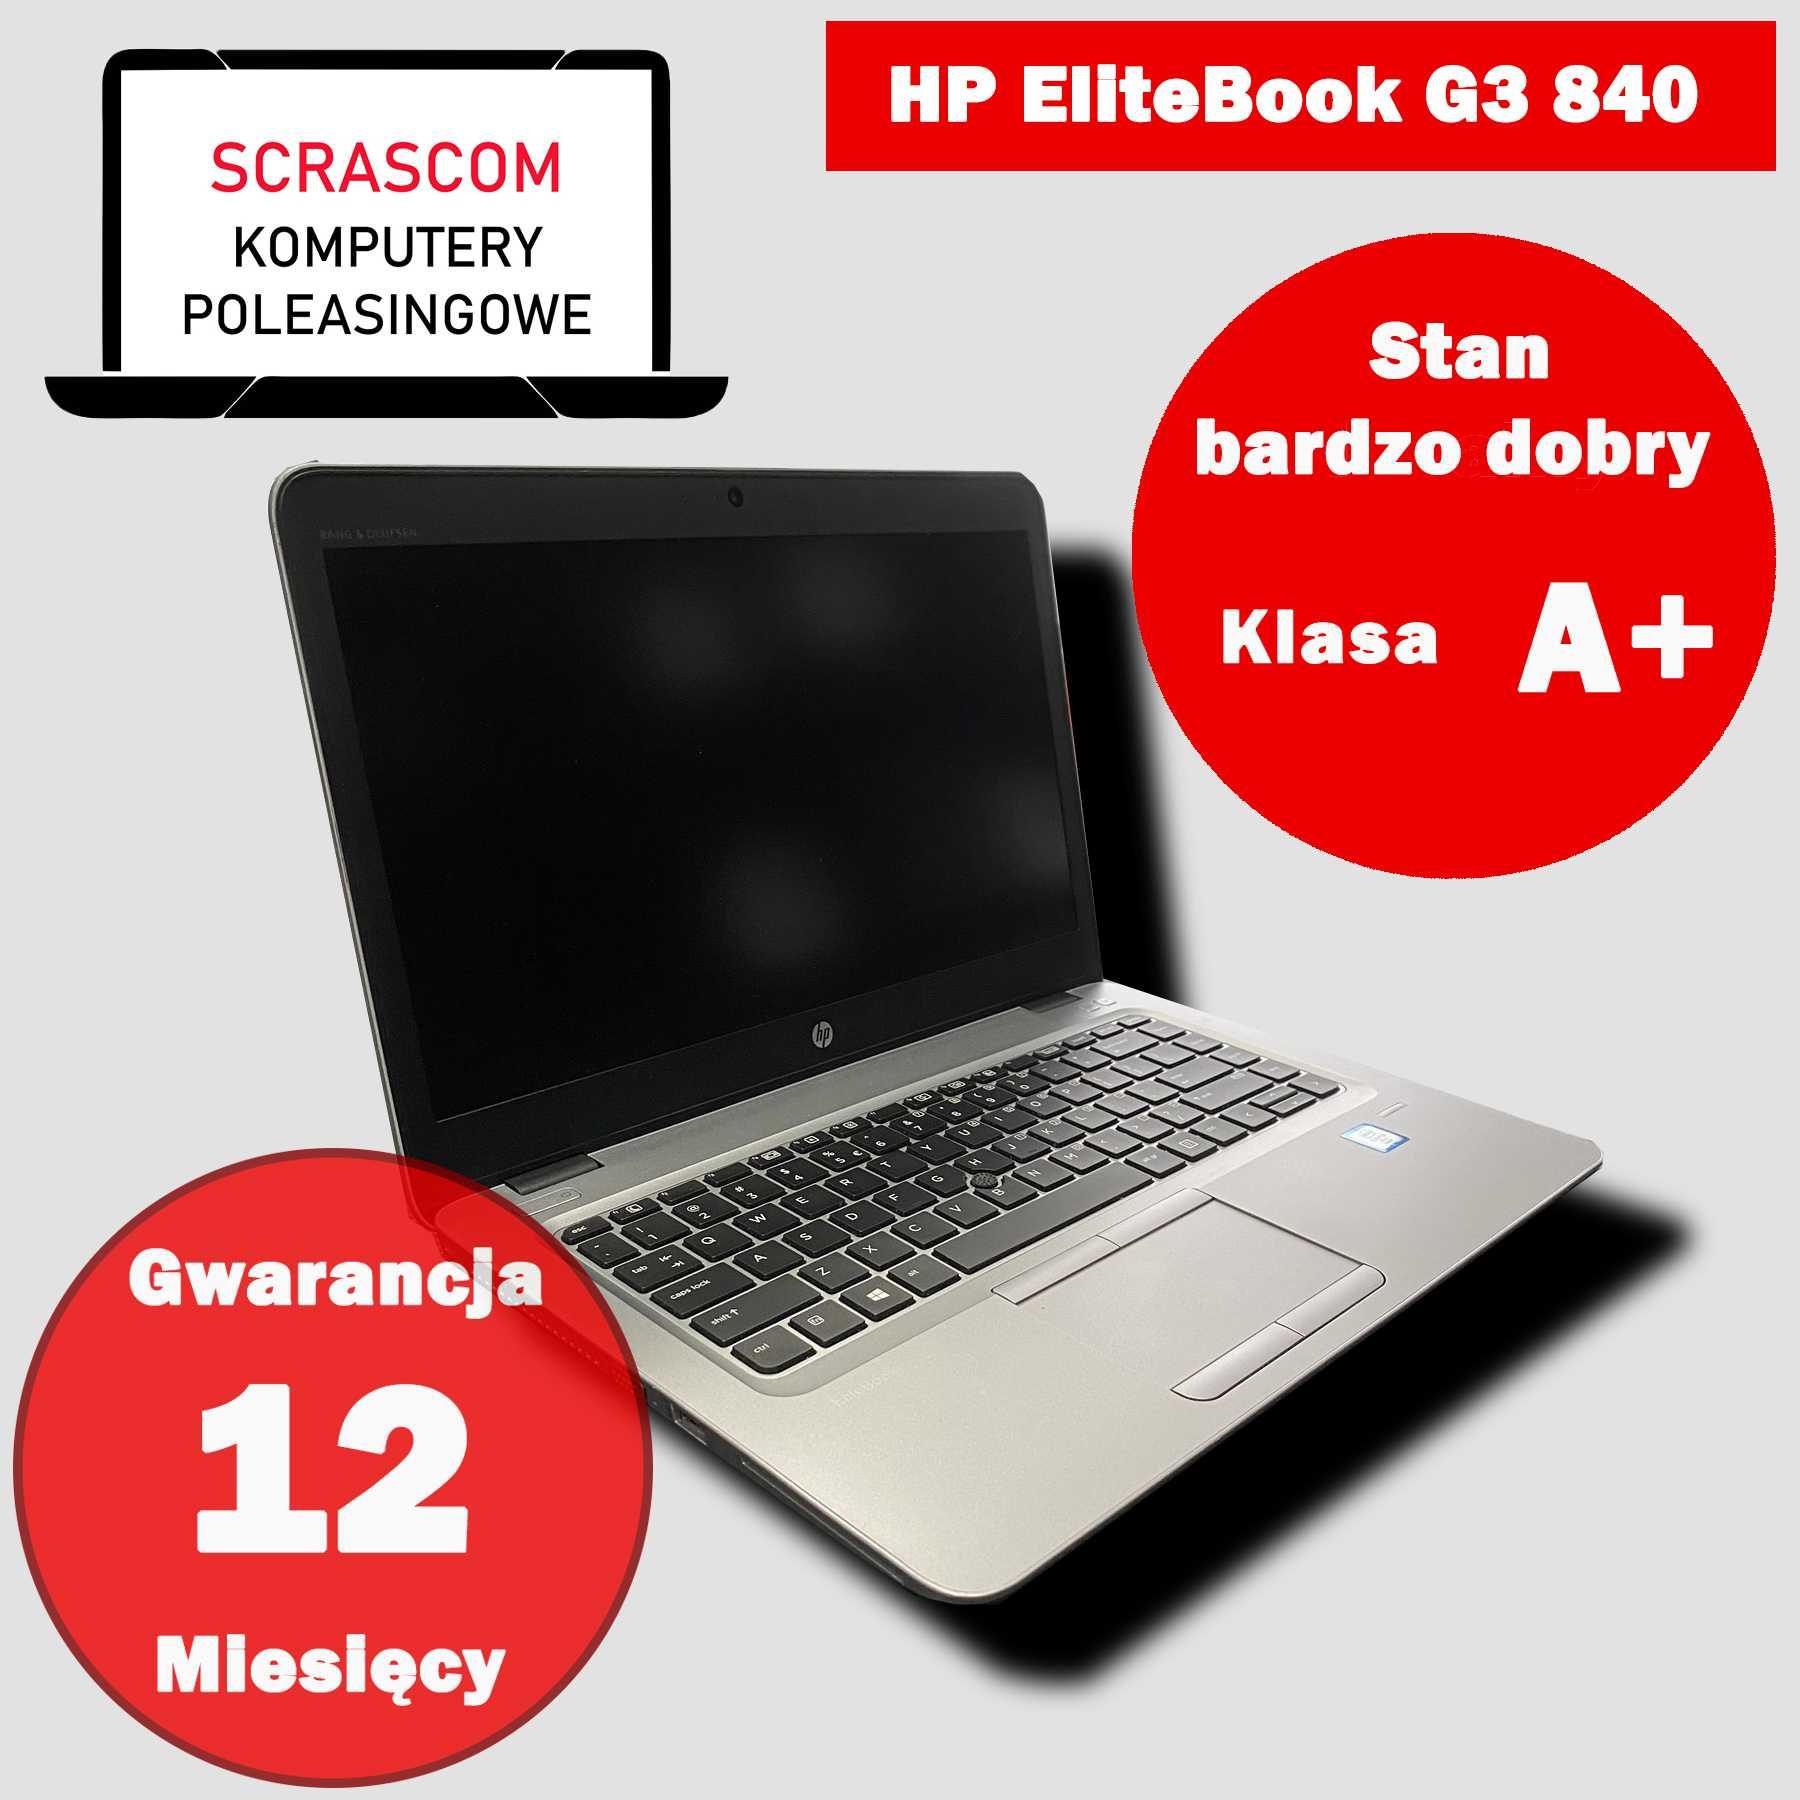 Laptop HP EliteBook G3 840 i5 8GB 256GB SSD Windows 10 GWAR 12msc